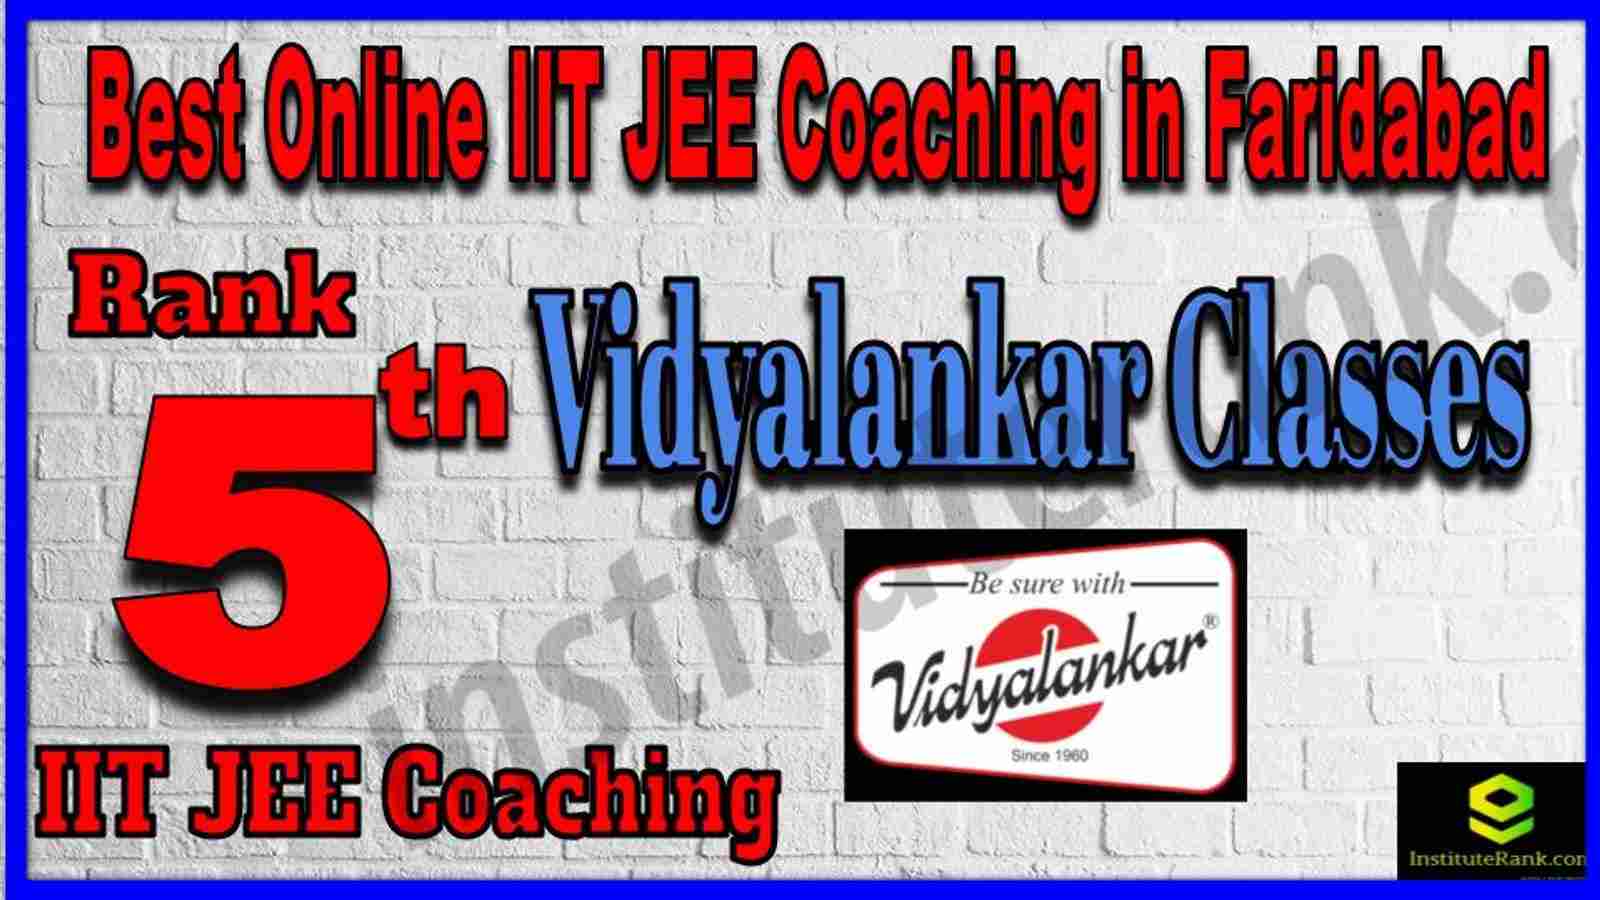 Rank 5th Best Online IIT JEE Coaching in Faridabad